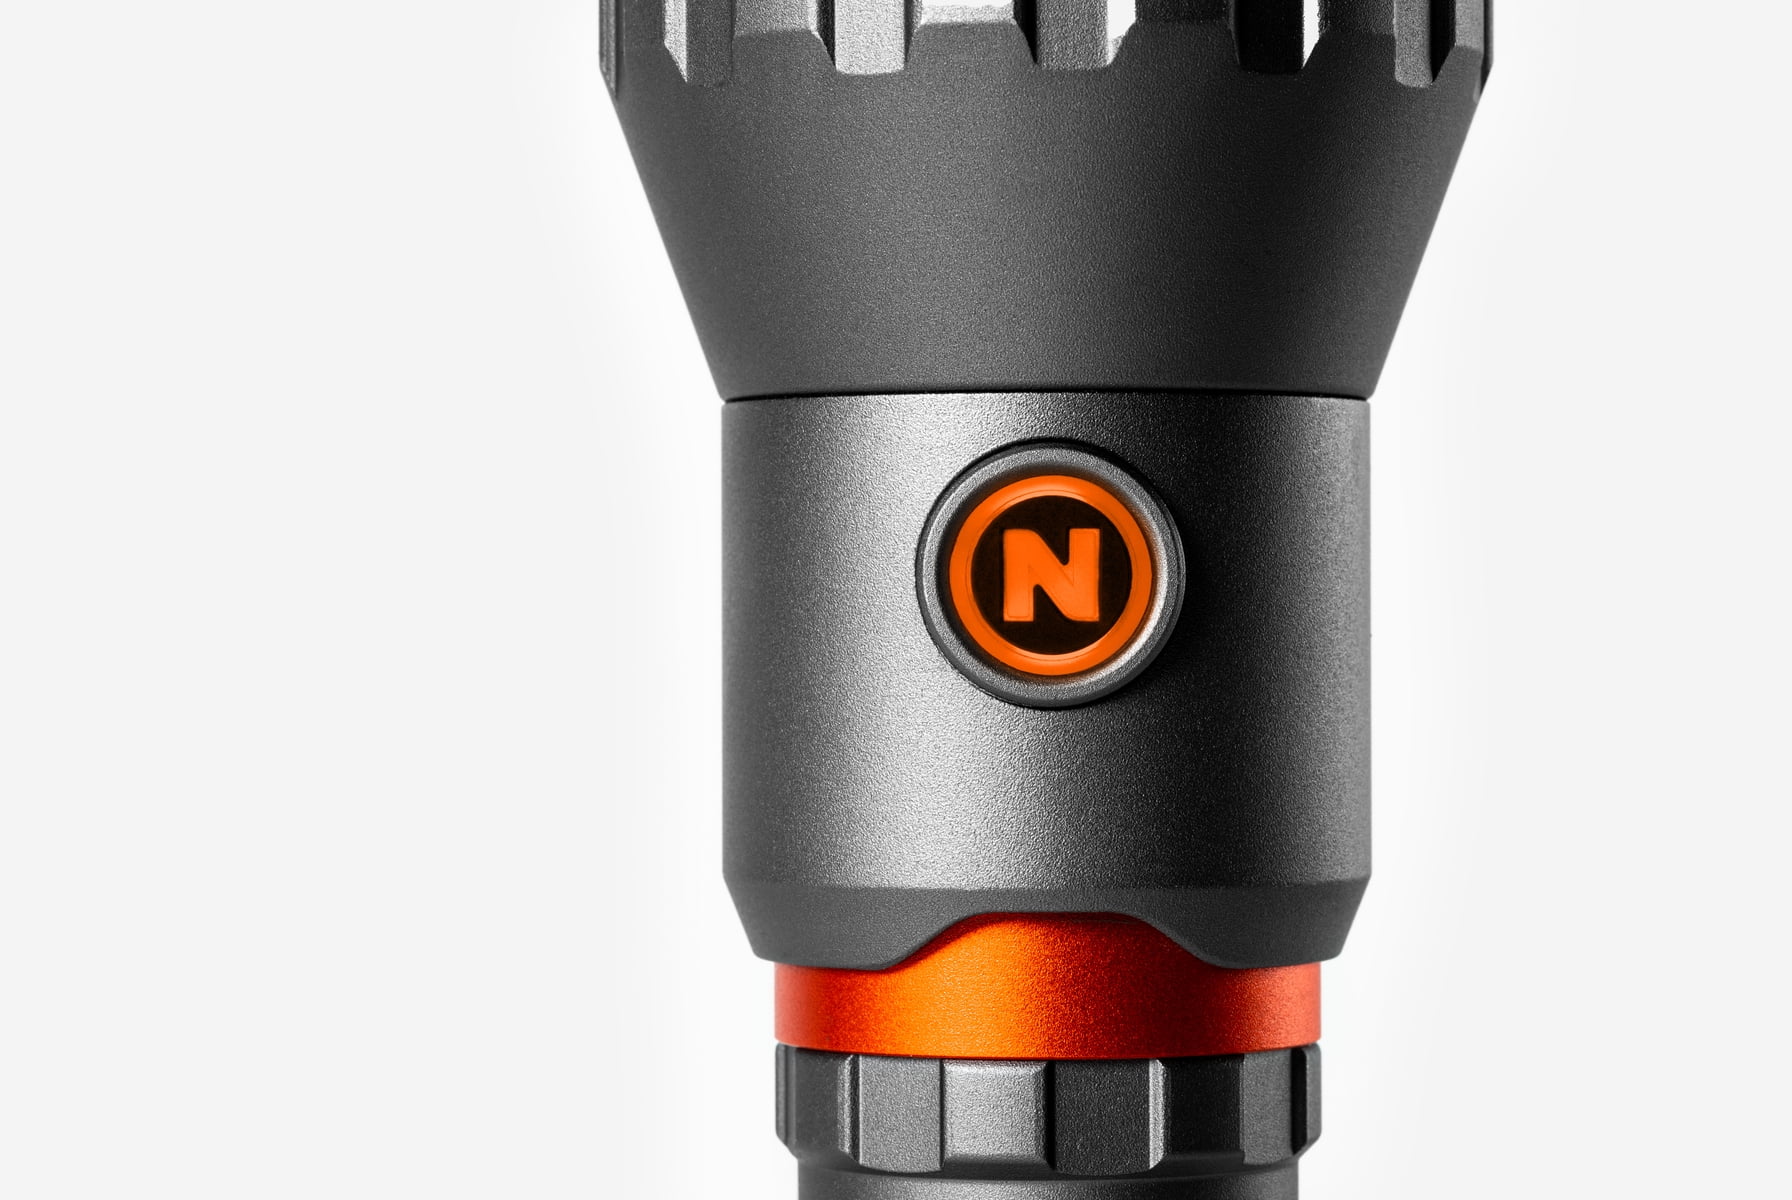 Nebo Focusable LED Flashlight - Certified Intrinsically Safe - 235 Lumens, 6759